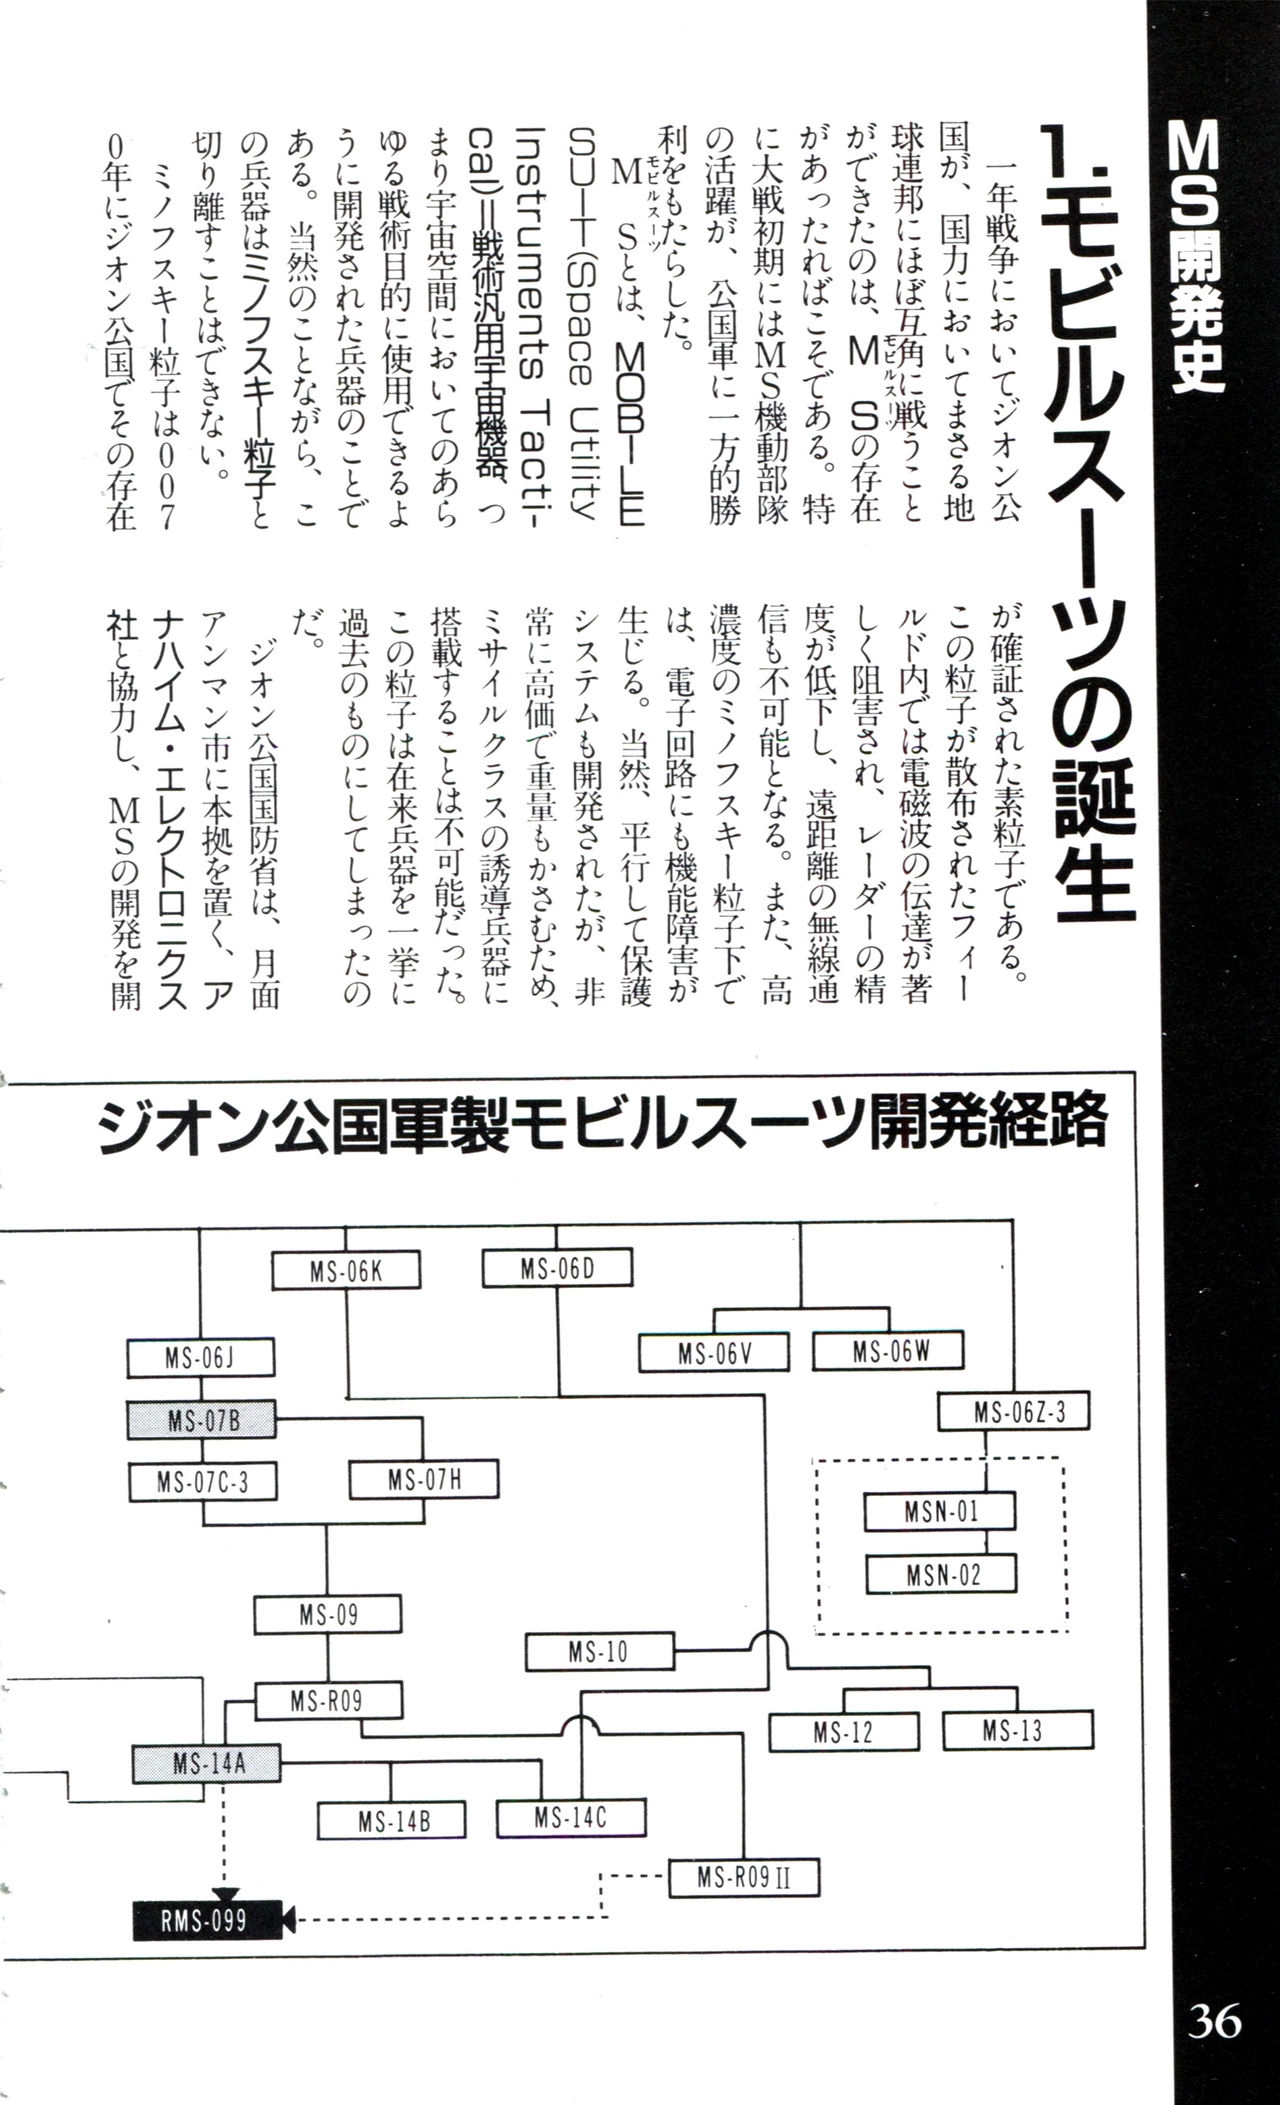 Mobile Suit Gundam U.C. Box MS Gundam Encyclopedia NO.01 - Mobile Suit Gundam 35